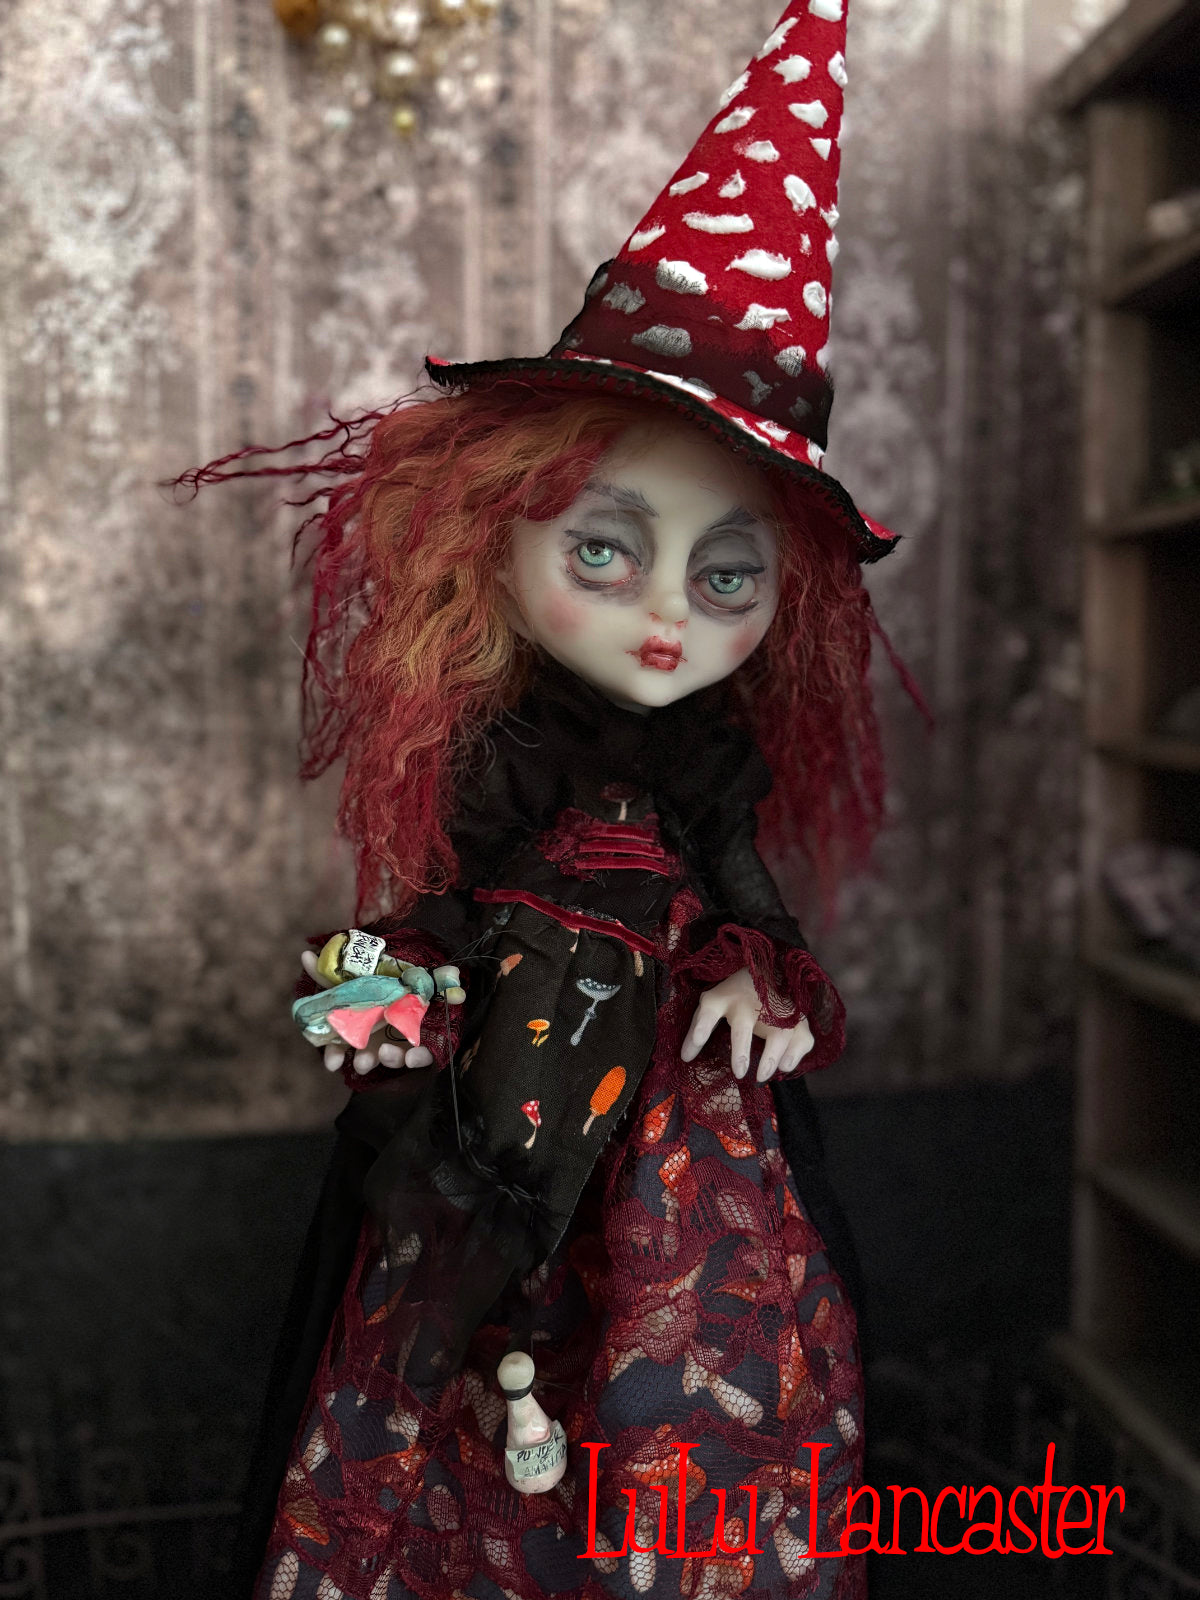 Livvy the Amanita Mushroom Witch Original LuLu Lancaster Art Doll